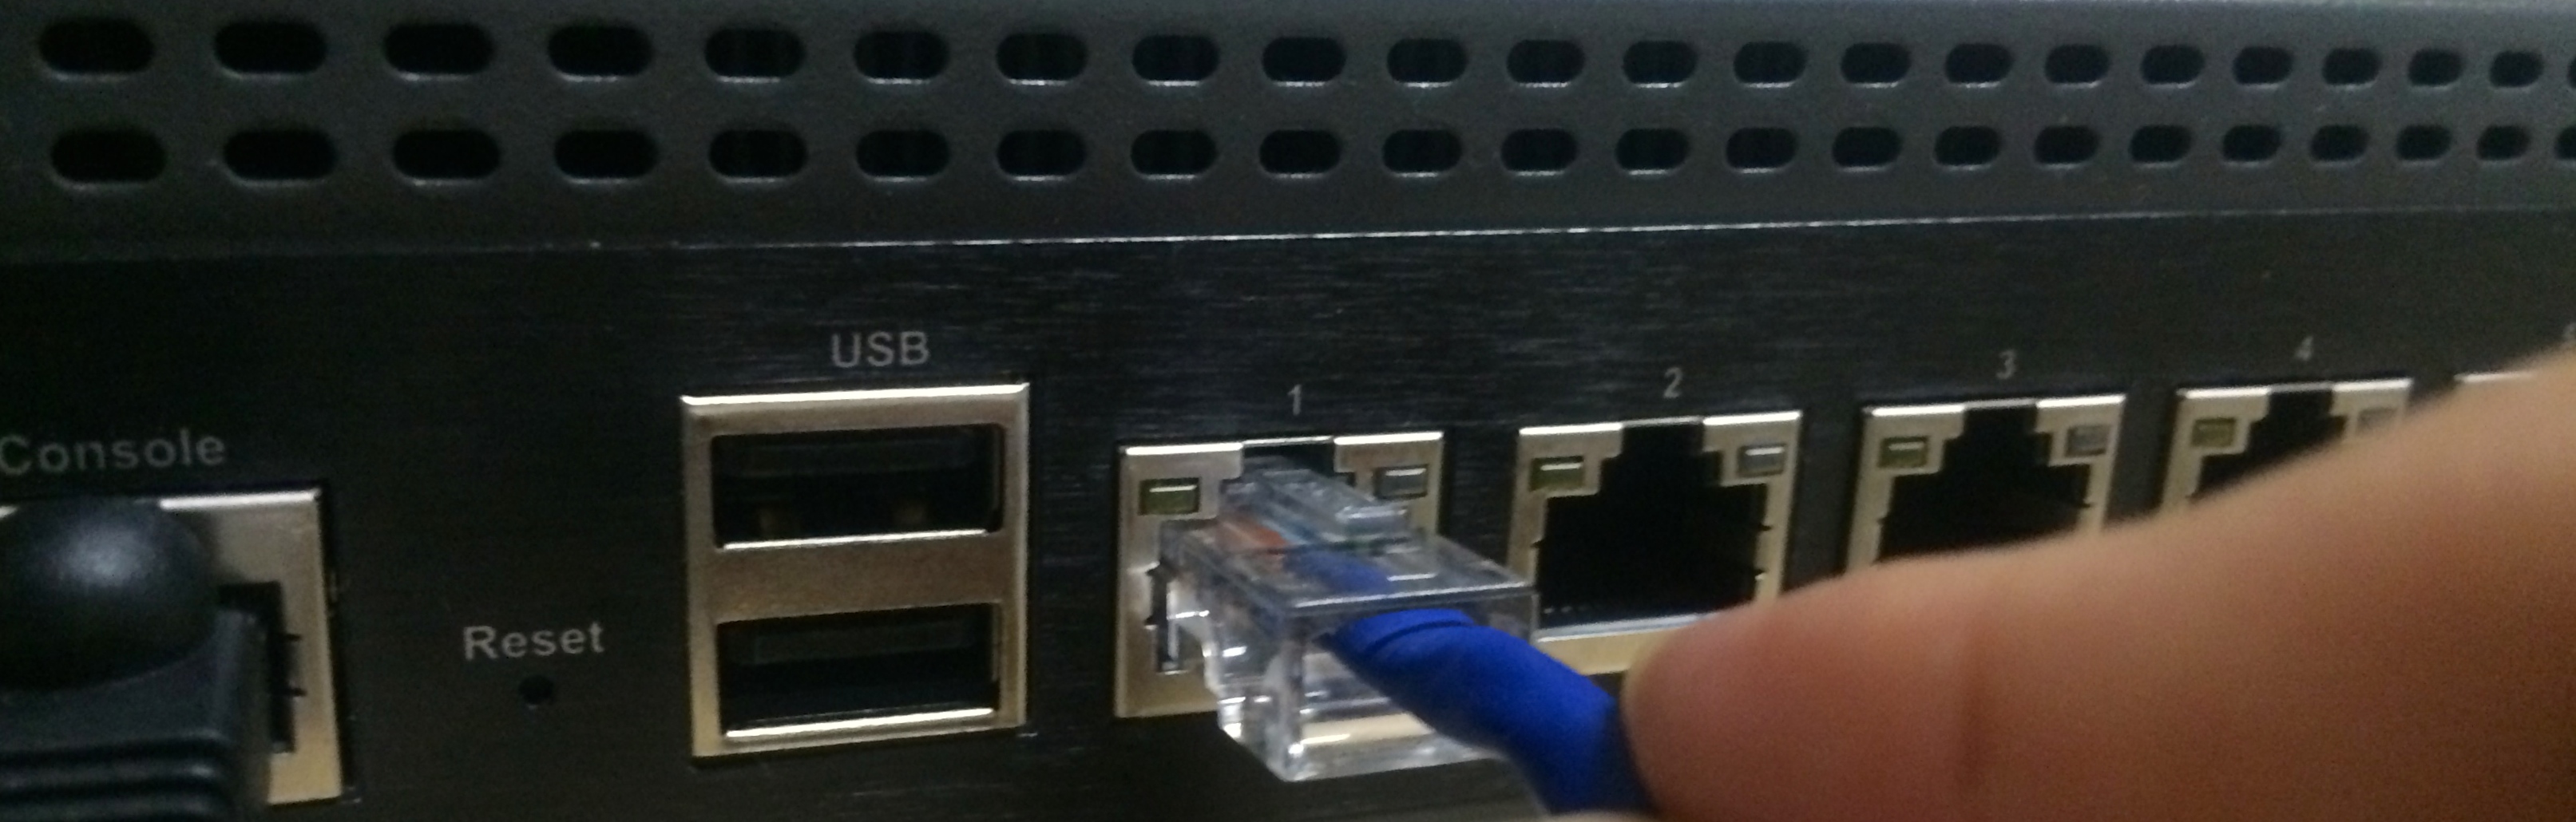 ServerU Network Cable